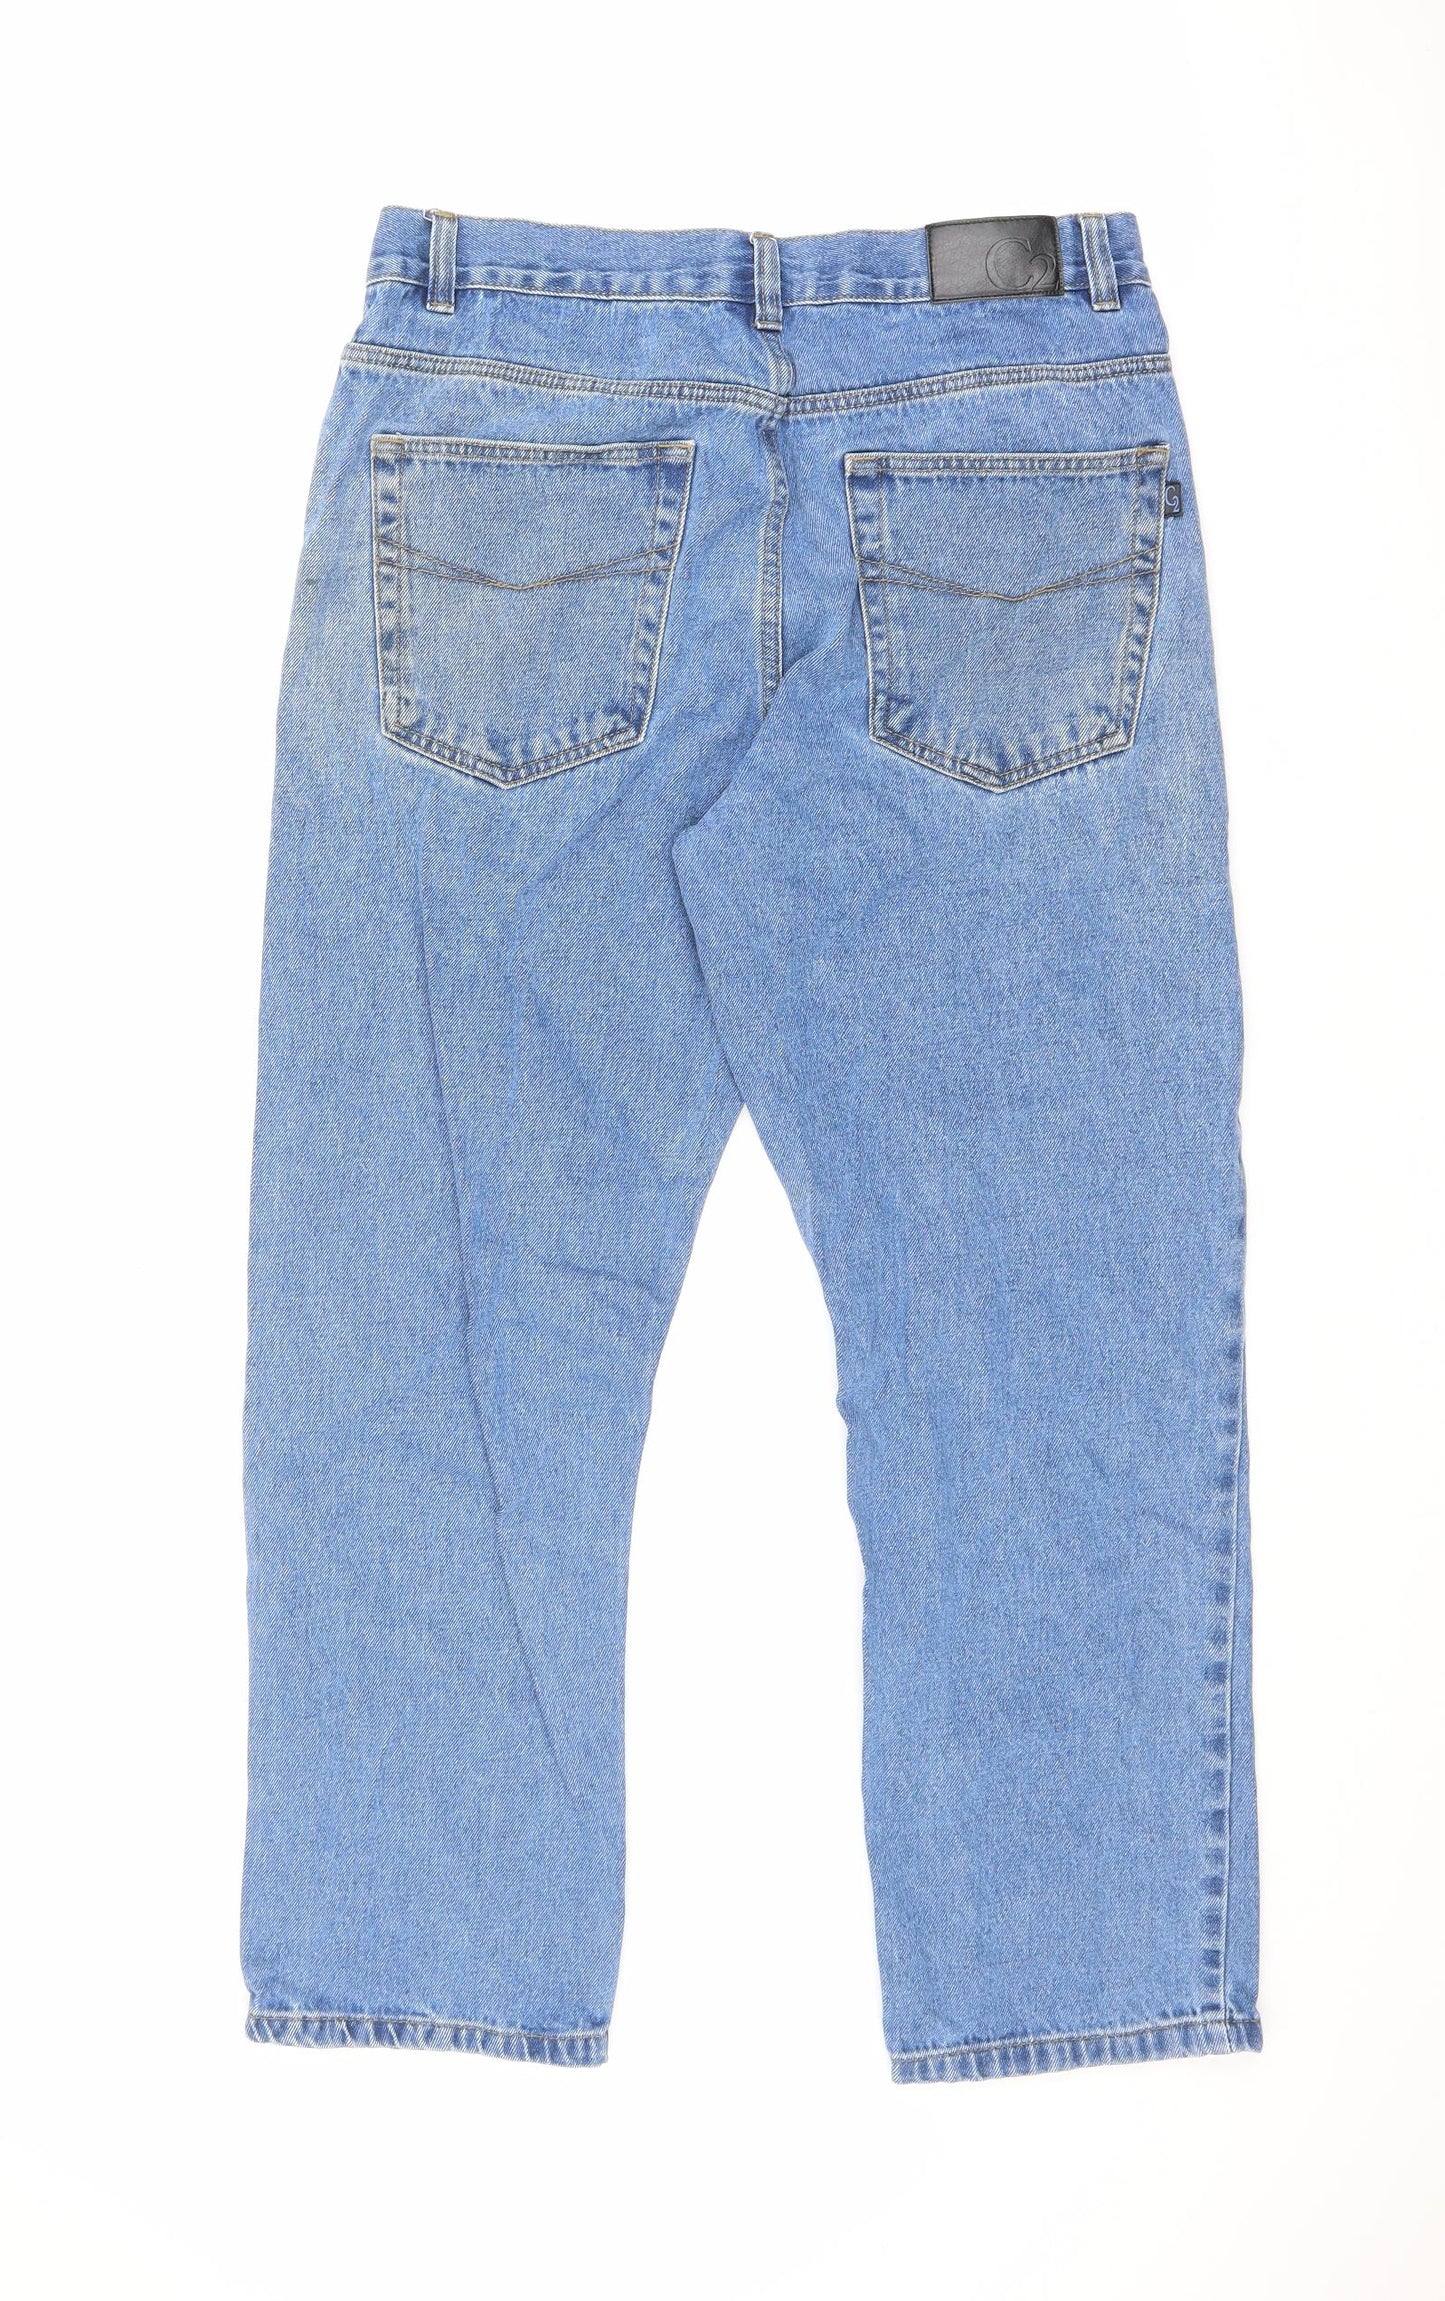 C2 Jeanswear Mens Blue Cotton Straight Jeans Size 34 in L27 in Regular Zip